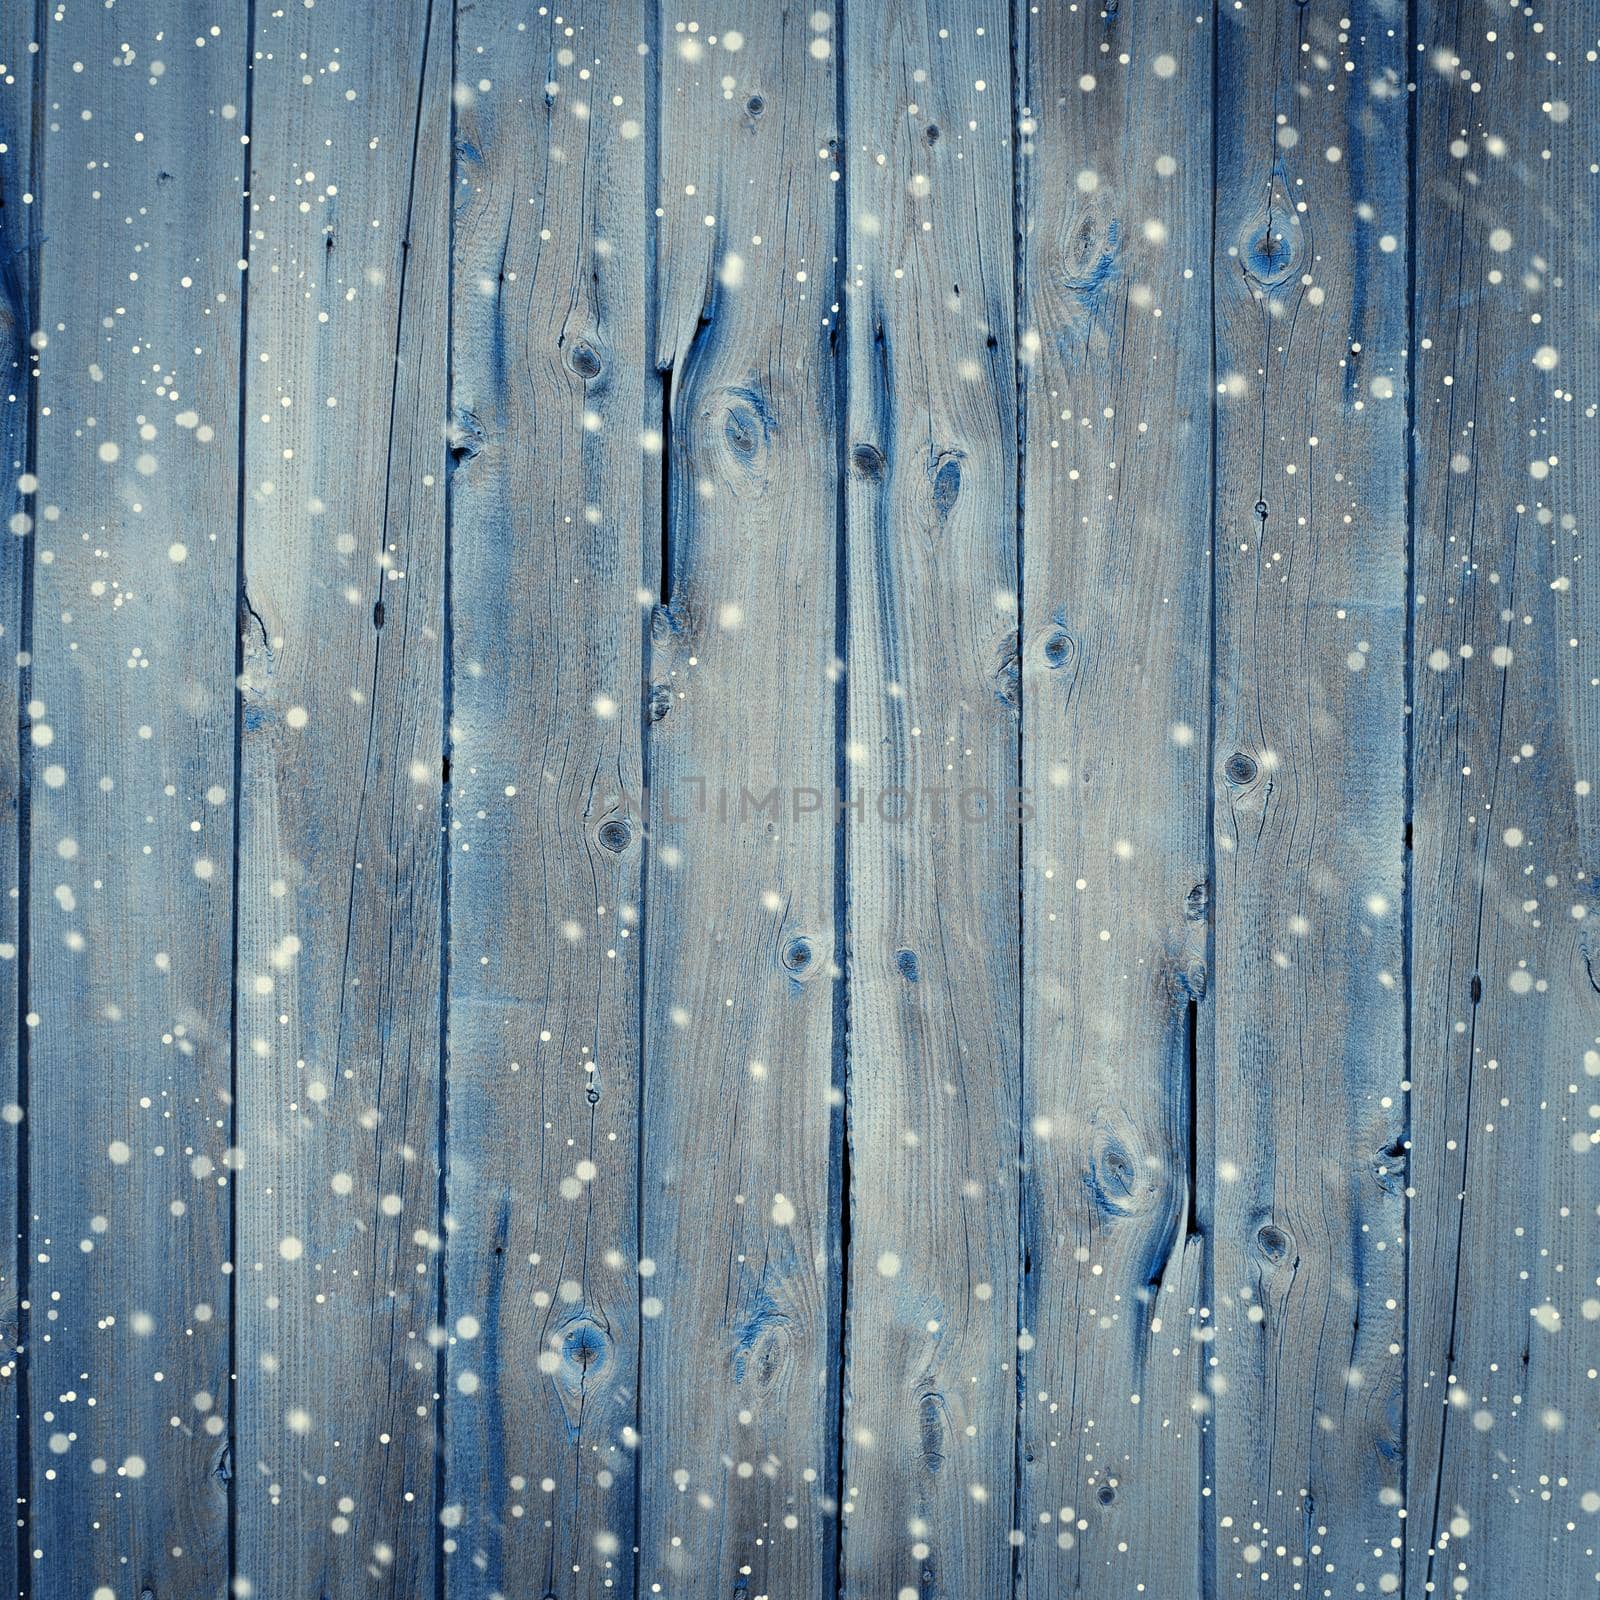 Blue festive Wood Background by kisika